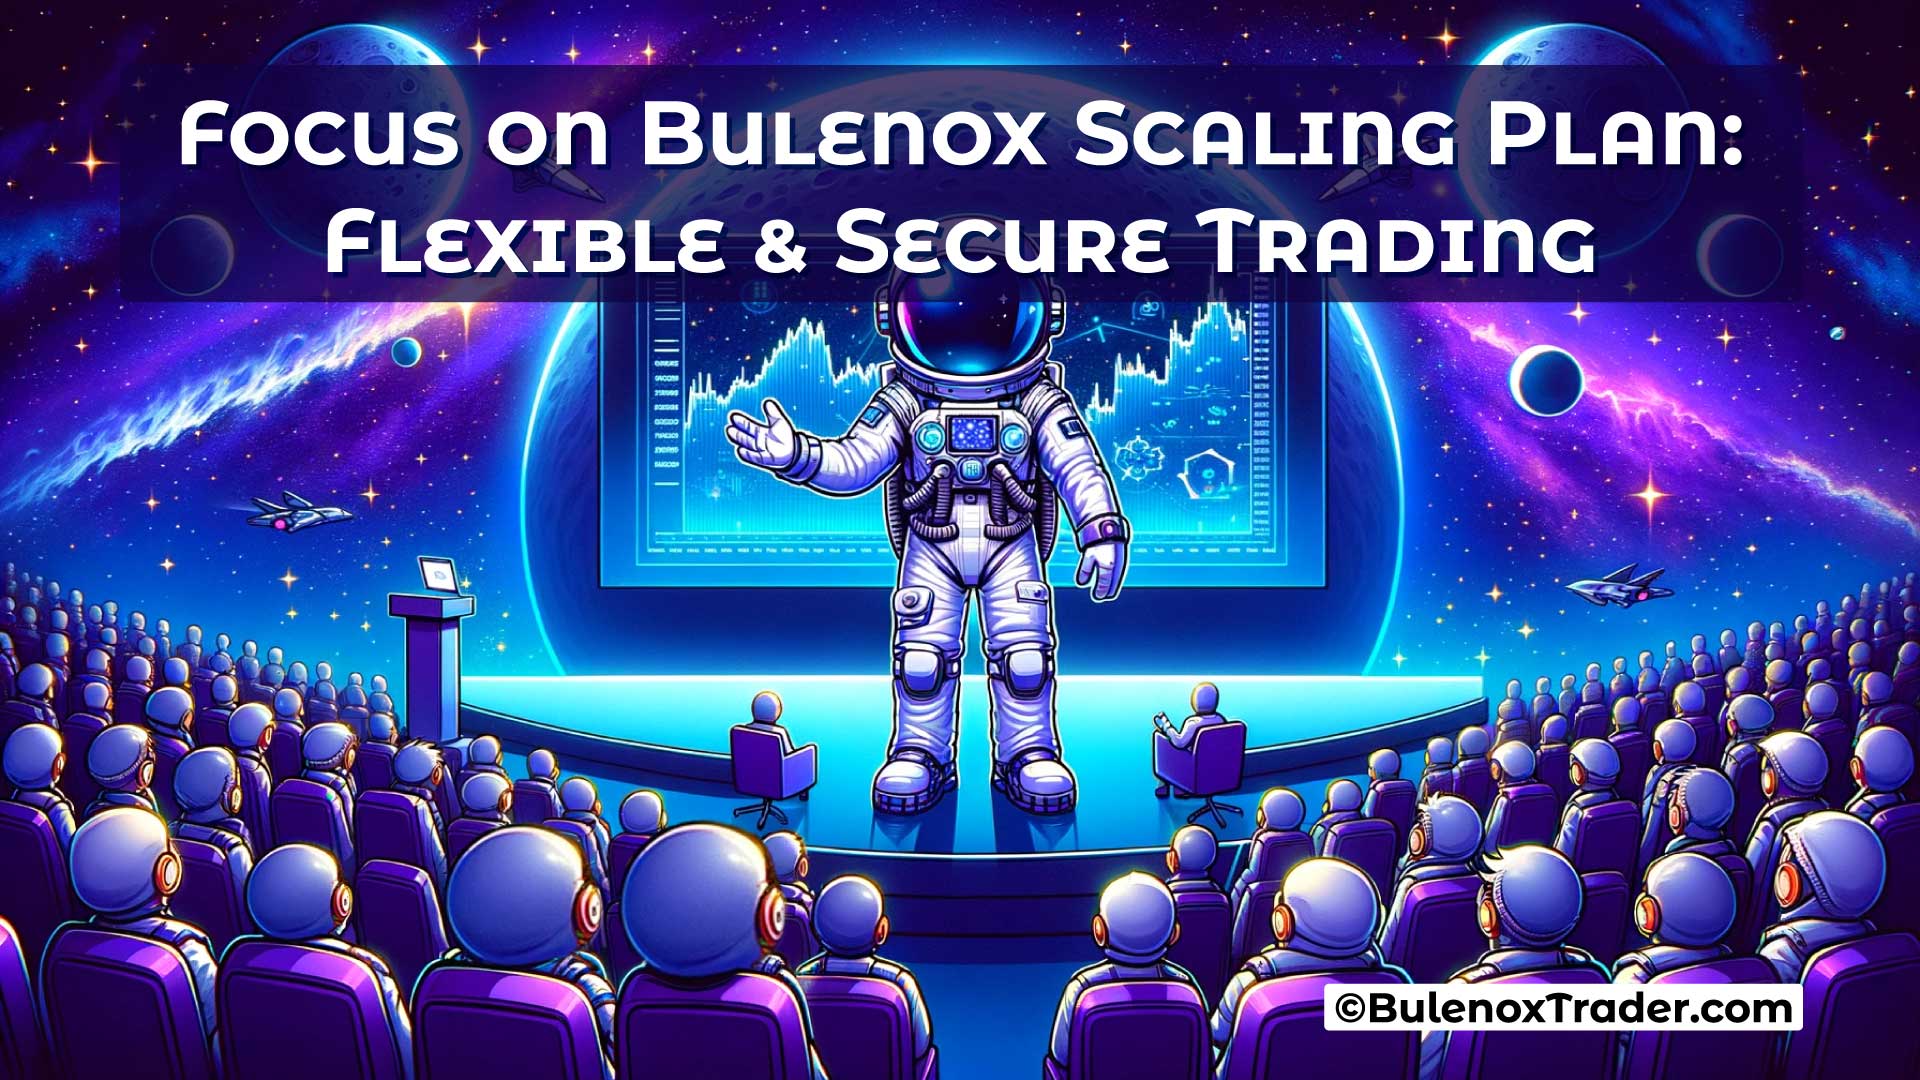 Focus-on-Bulenox-Scaling-Plan-Flexible-&-Secure-Trading-on-Bulenox-Trader-Website